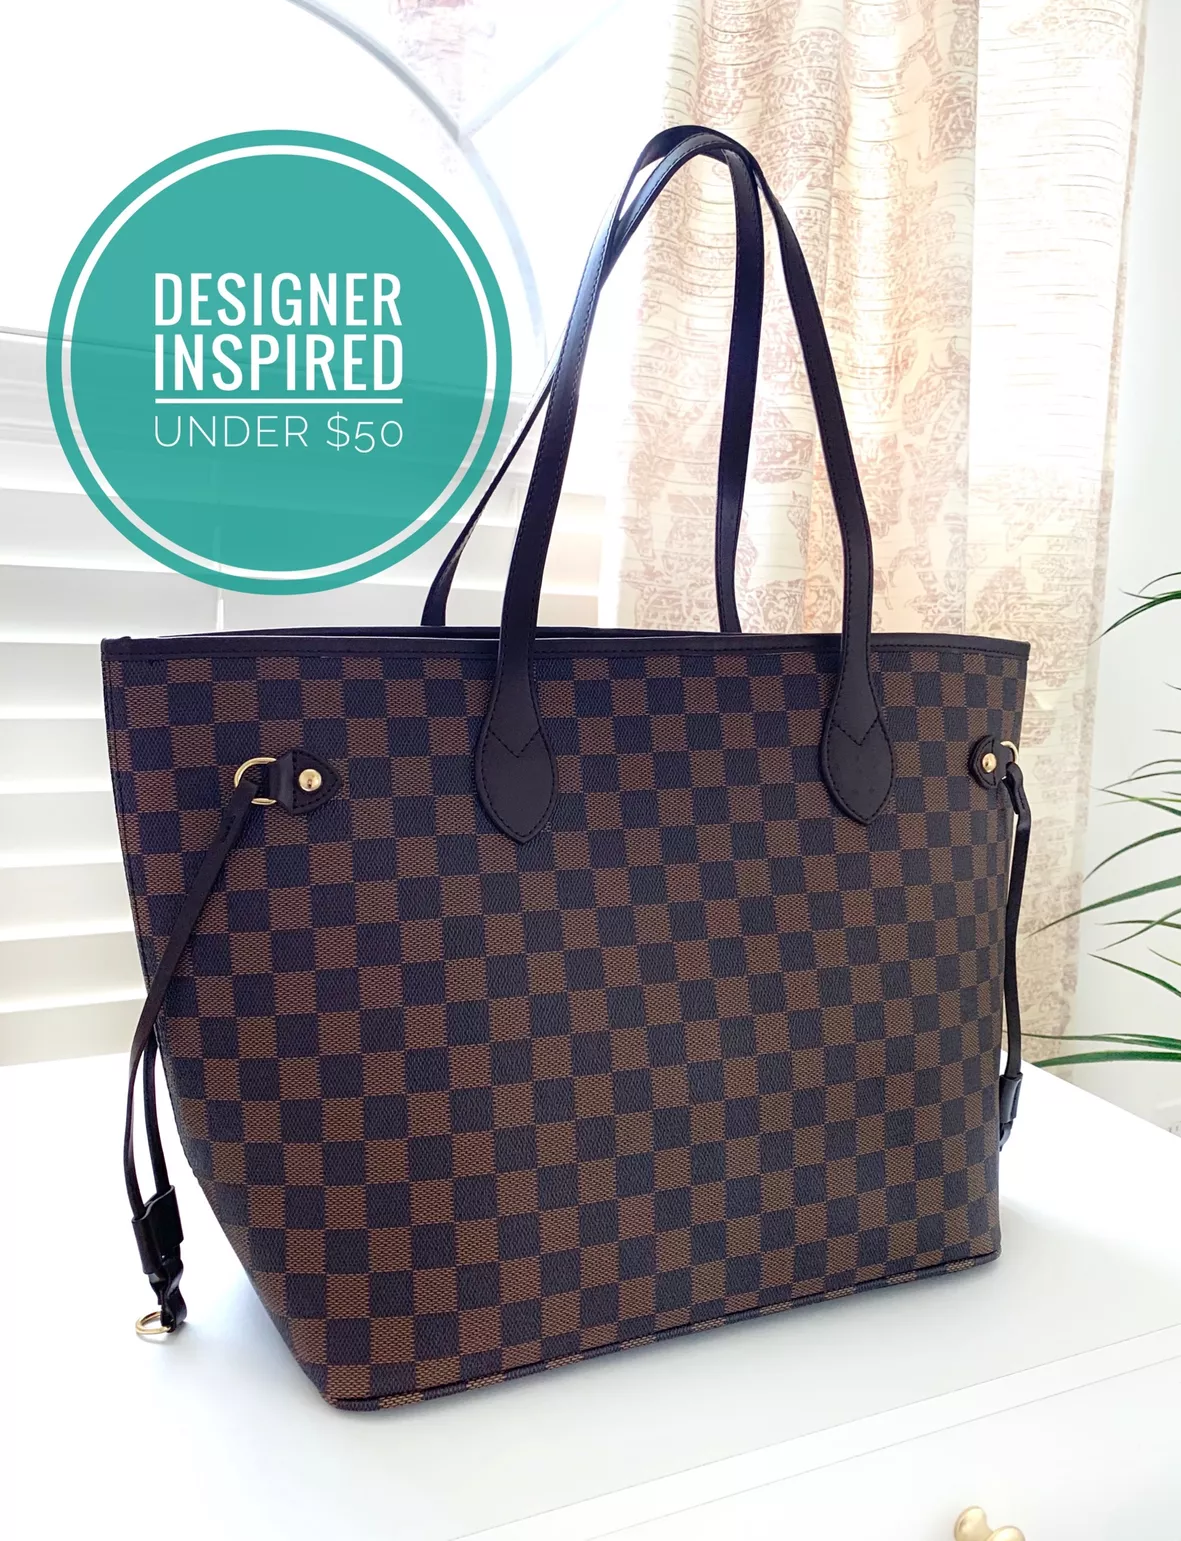 Twenty Four Women's Checkered Leather Handbag